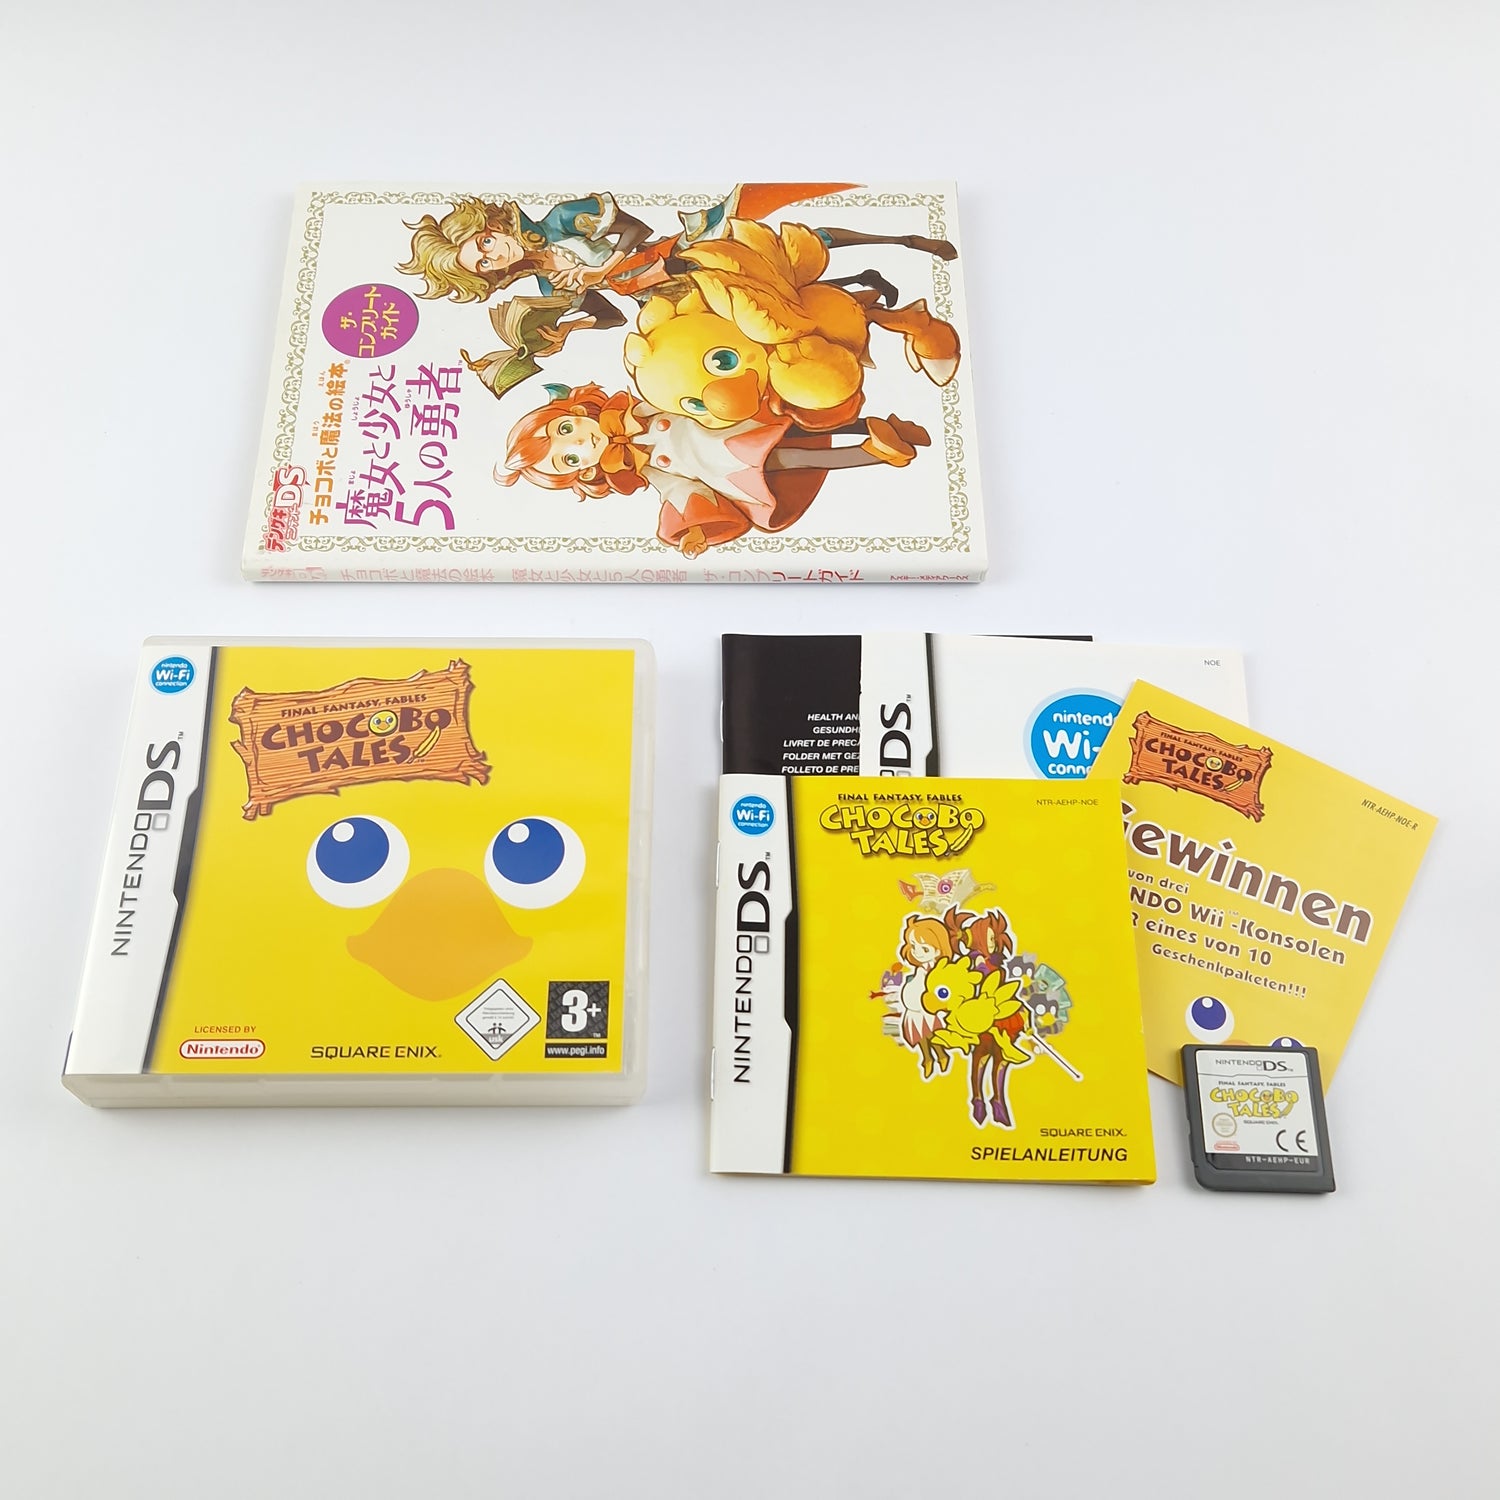 Nintendo DS Spiel : Final Fantasy Fables Chocobo Tales + JAPAN Guide